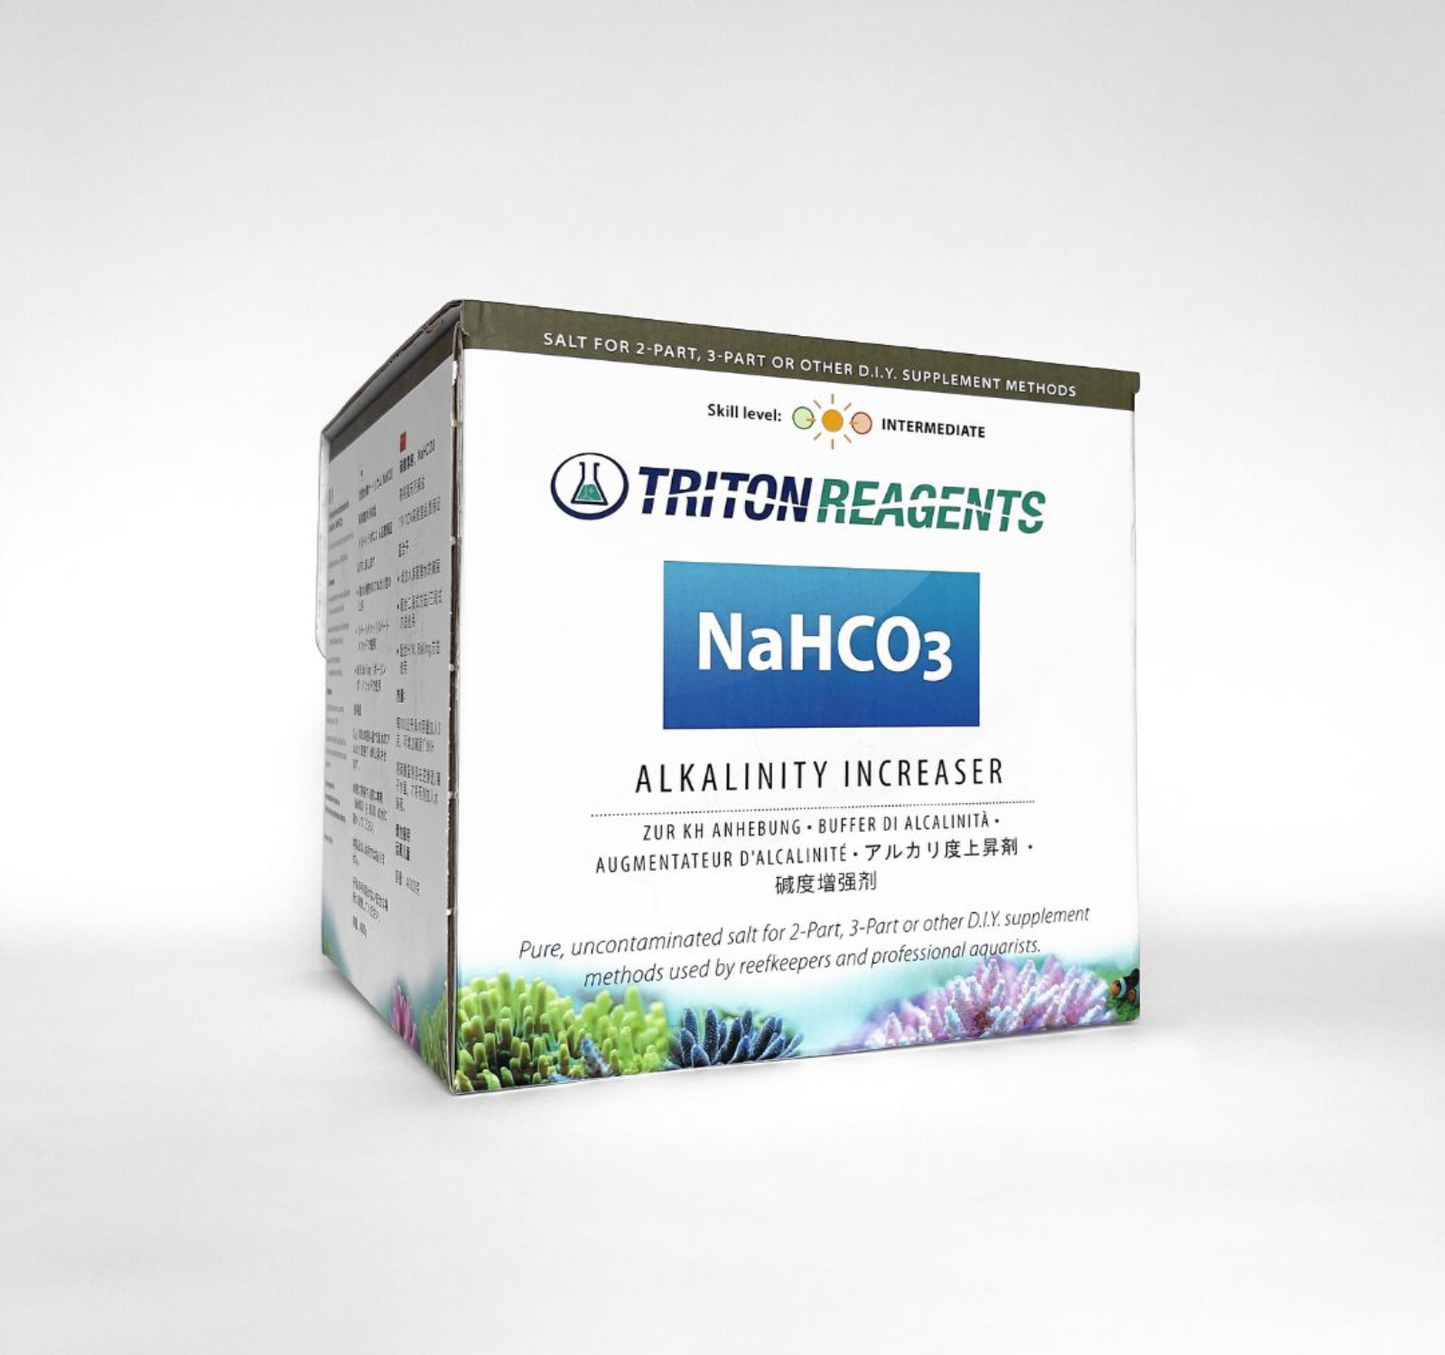 NaHCO3 Alkalinity Increaser